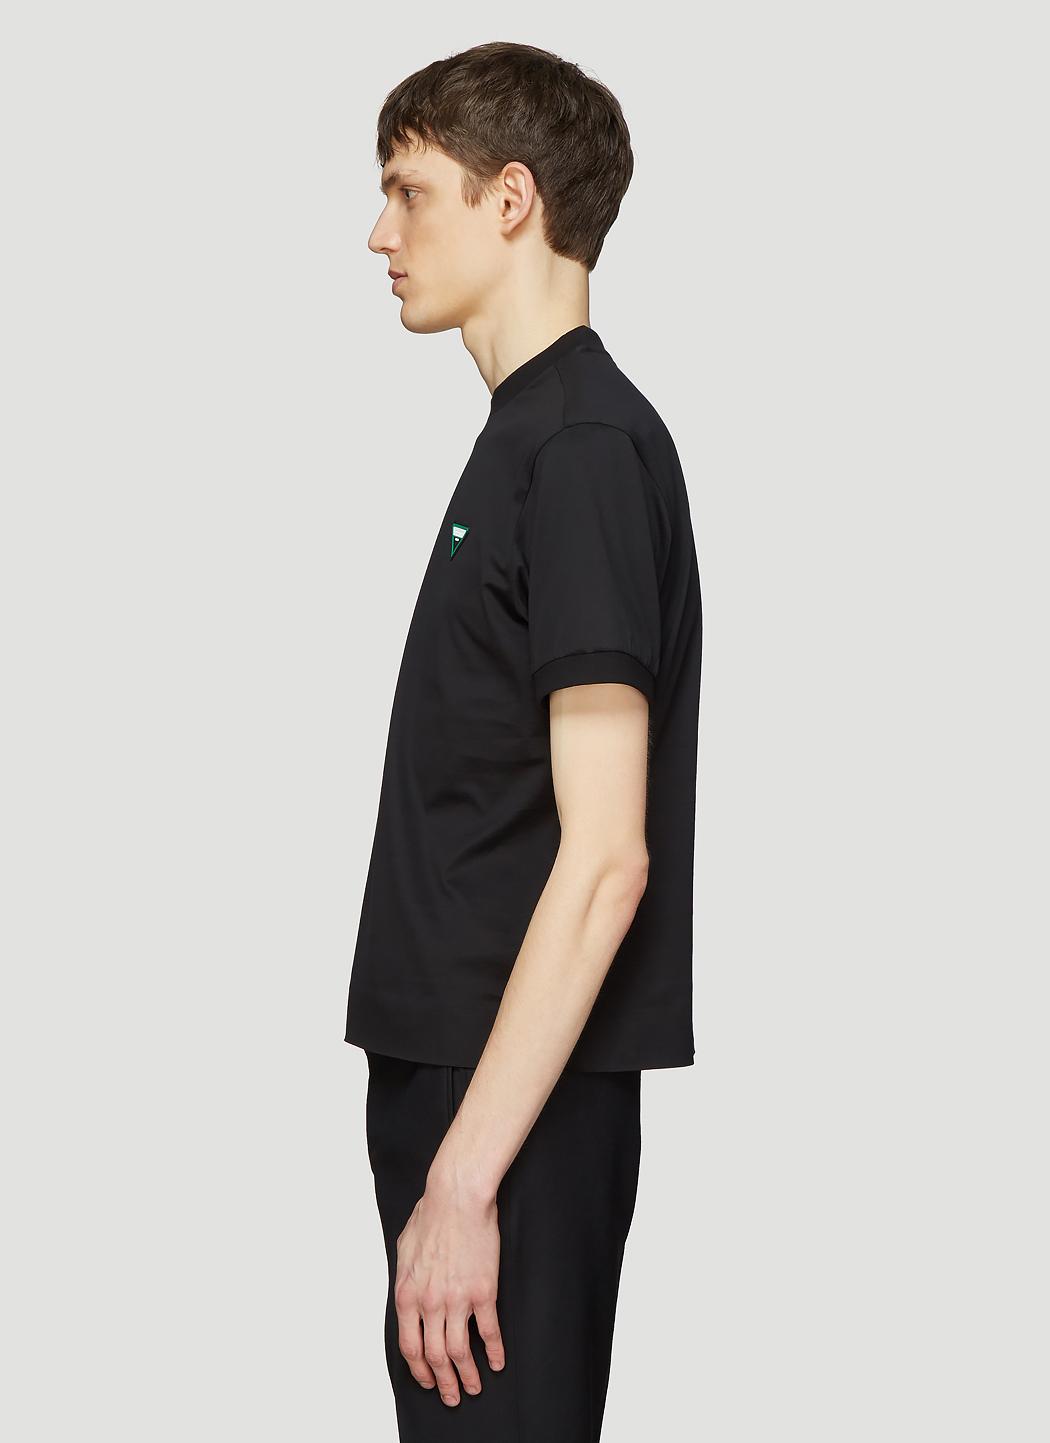 Prada Logo Triangle Cotton T-shirt in Nero (Black) for Men - Lyst